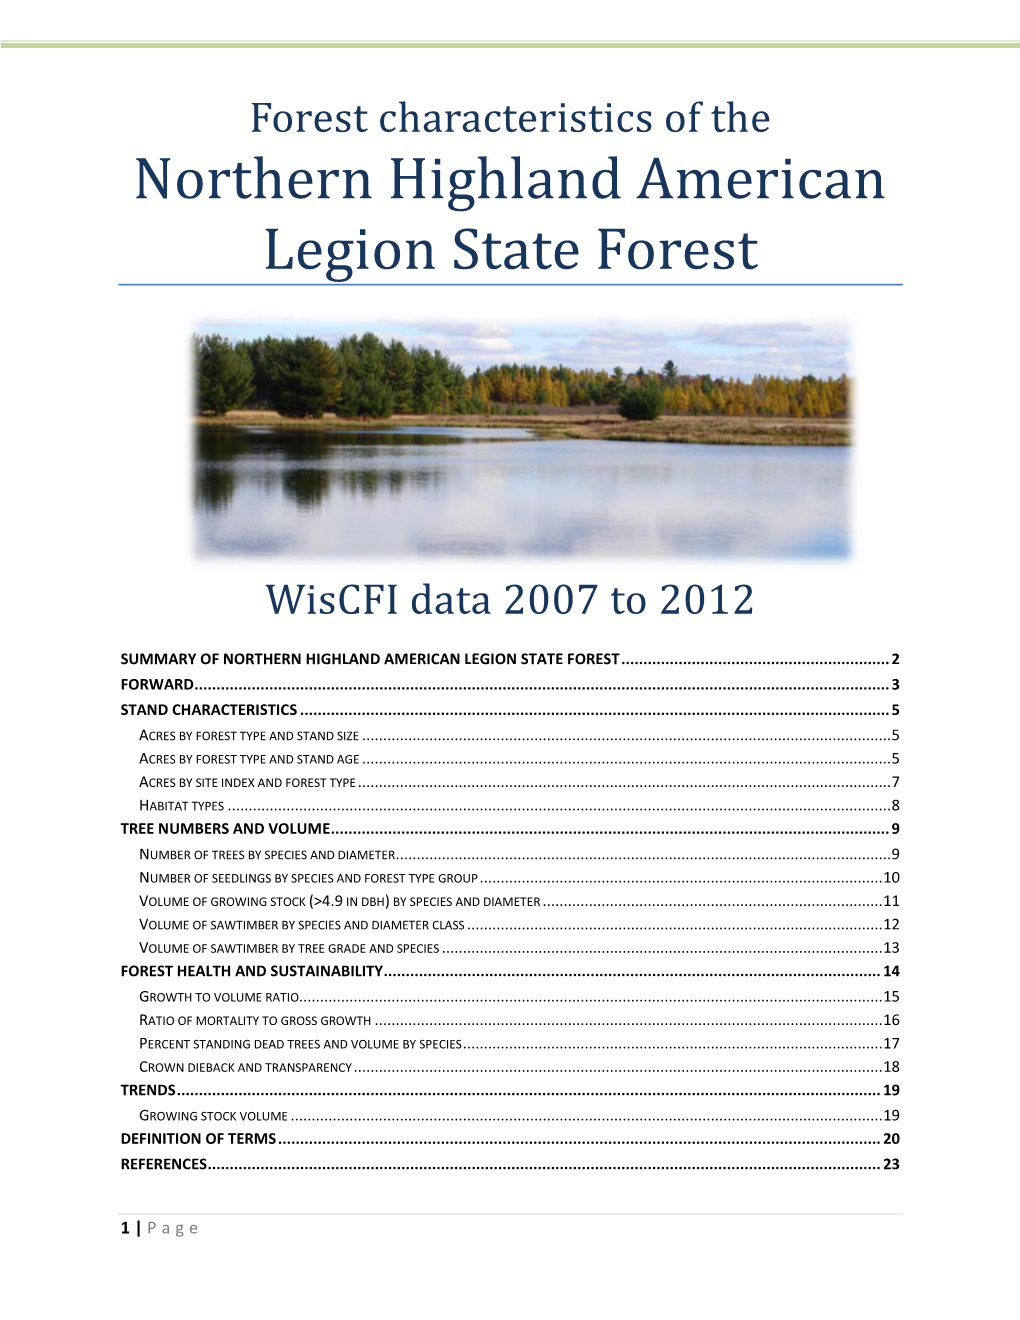 Northern Highland American Legion State Forest [PDF]